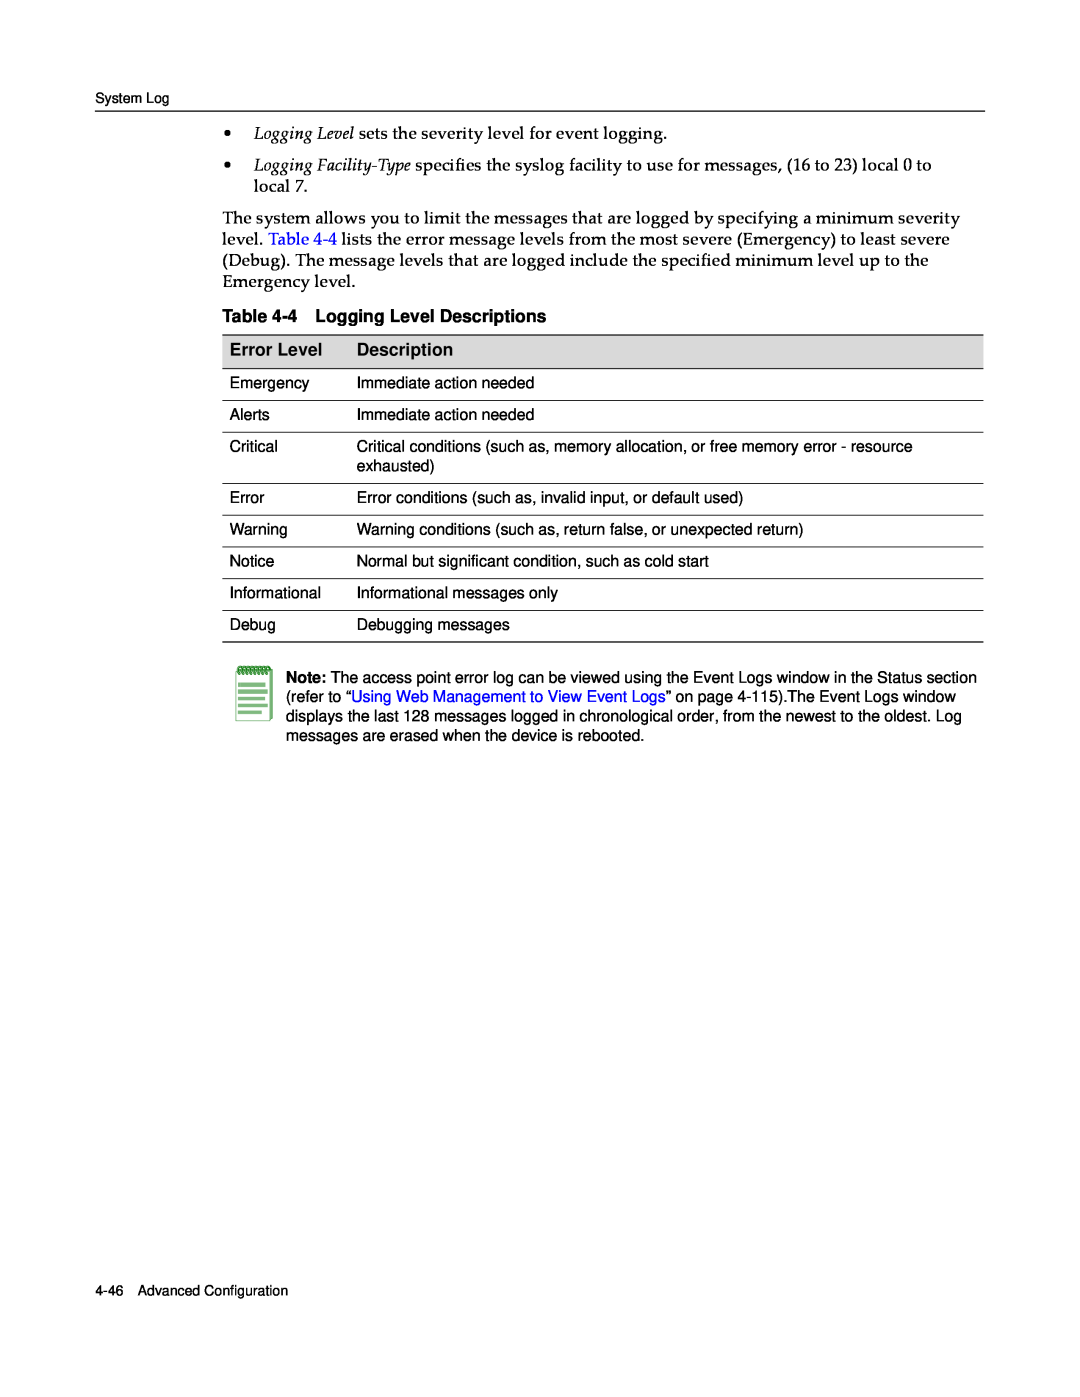 Enterasys Networks RBT-4102 manual 4 Logging Level Descriptions, Error Level 